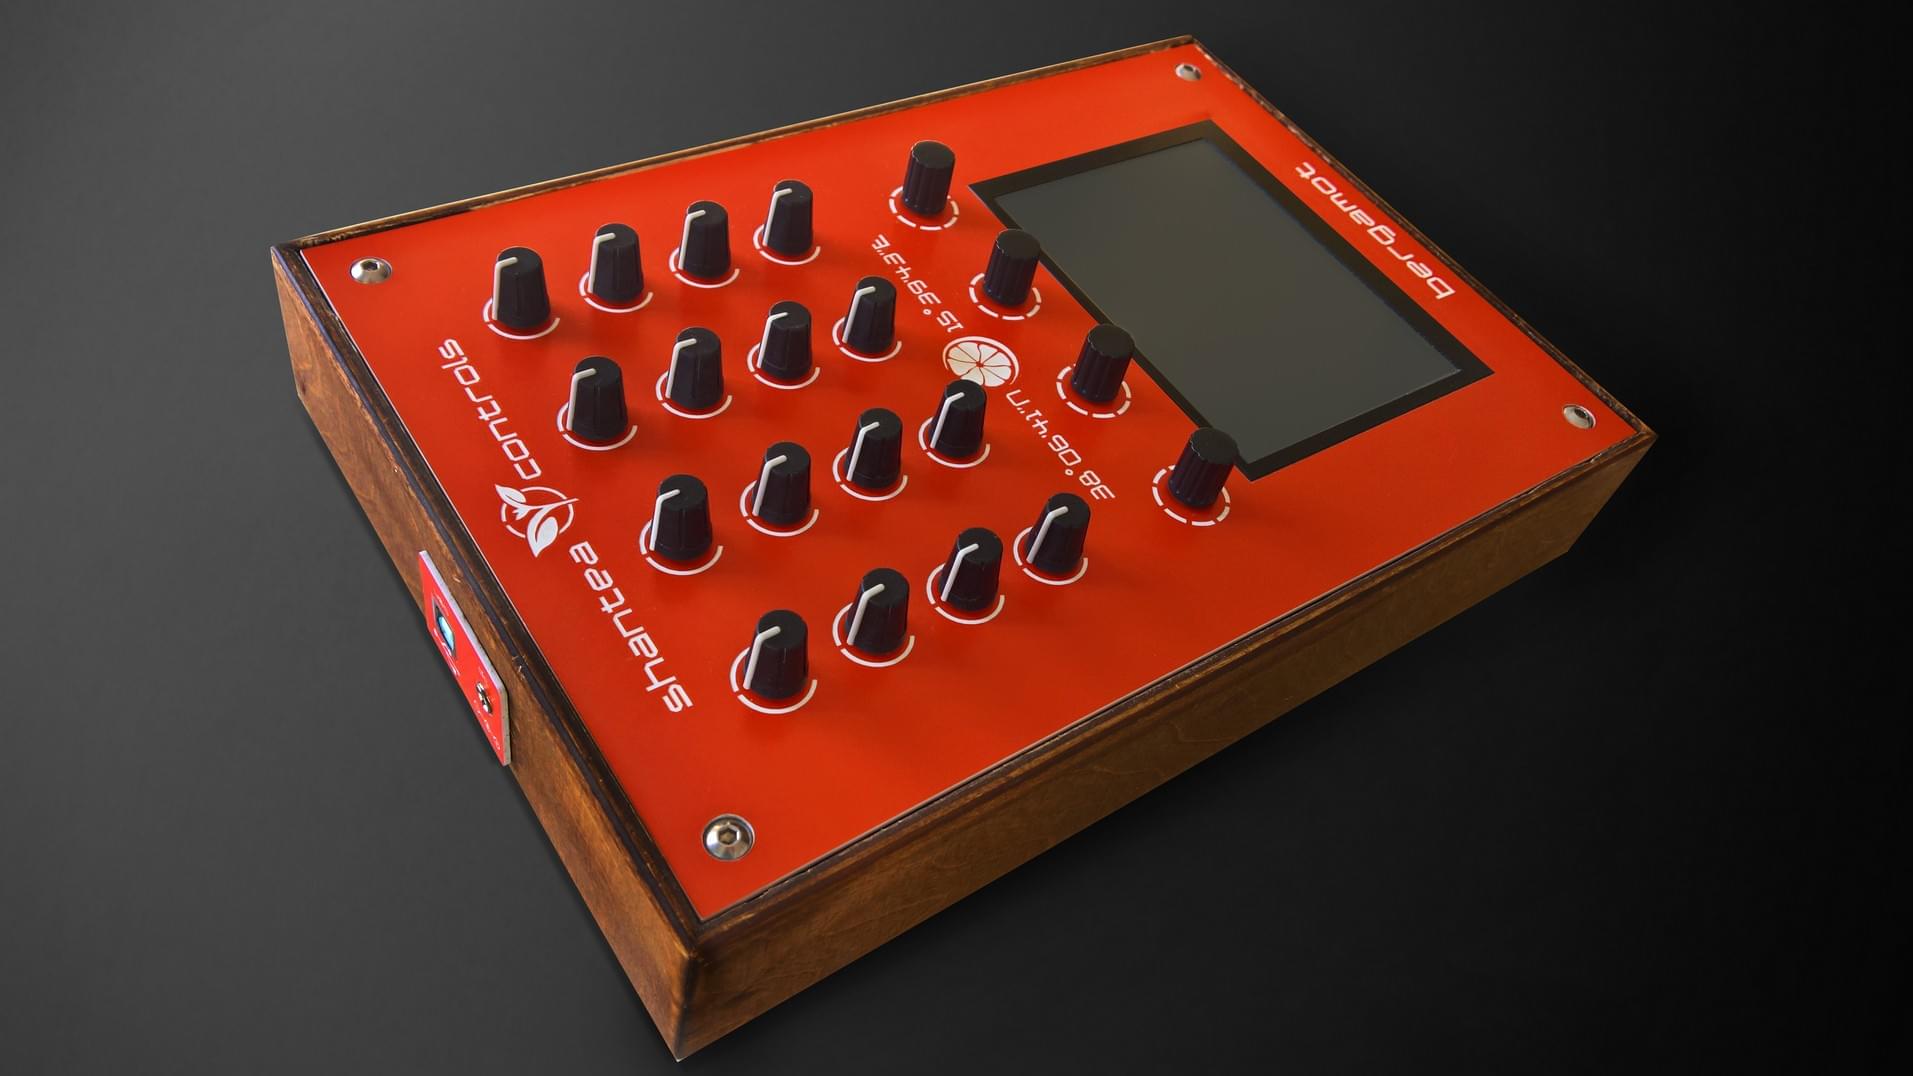 Touchscreen-based MIDI controller